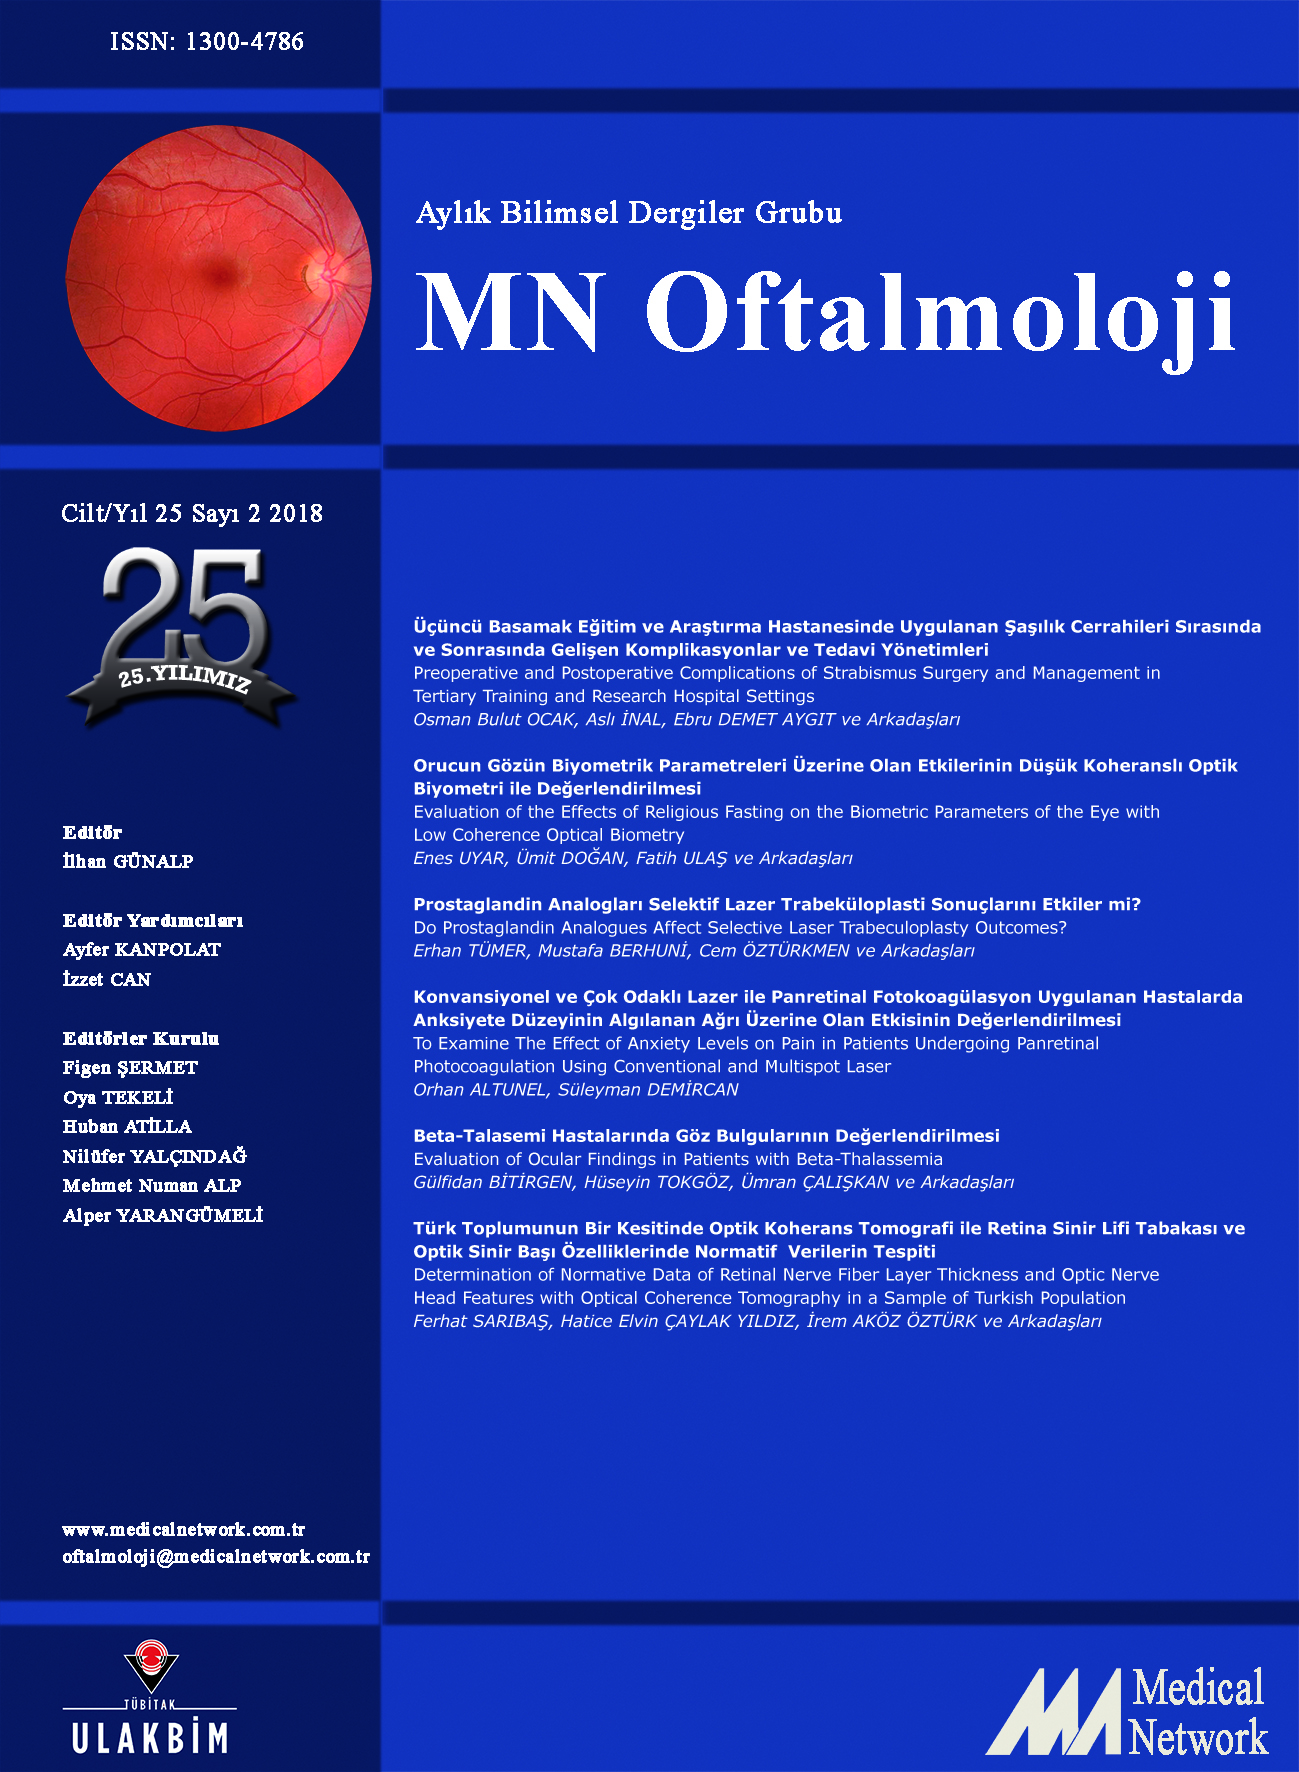 <div>MN Oftalmoloji Cilt: 25 Sayı: 2 2018 (MN Ophthalmology Volume: 25 No 2 2018)</div>